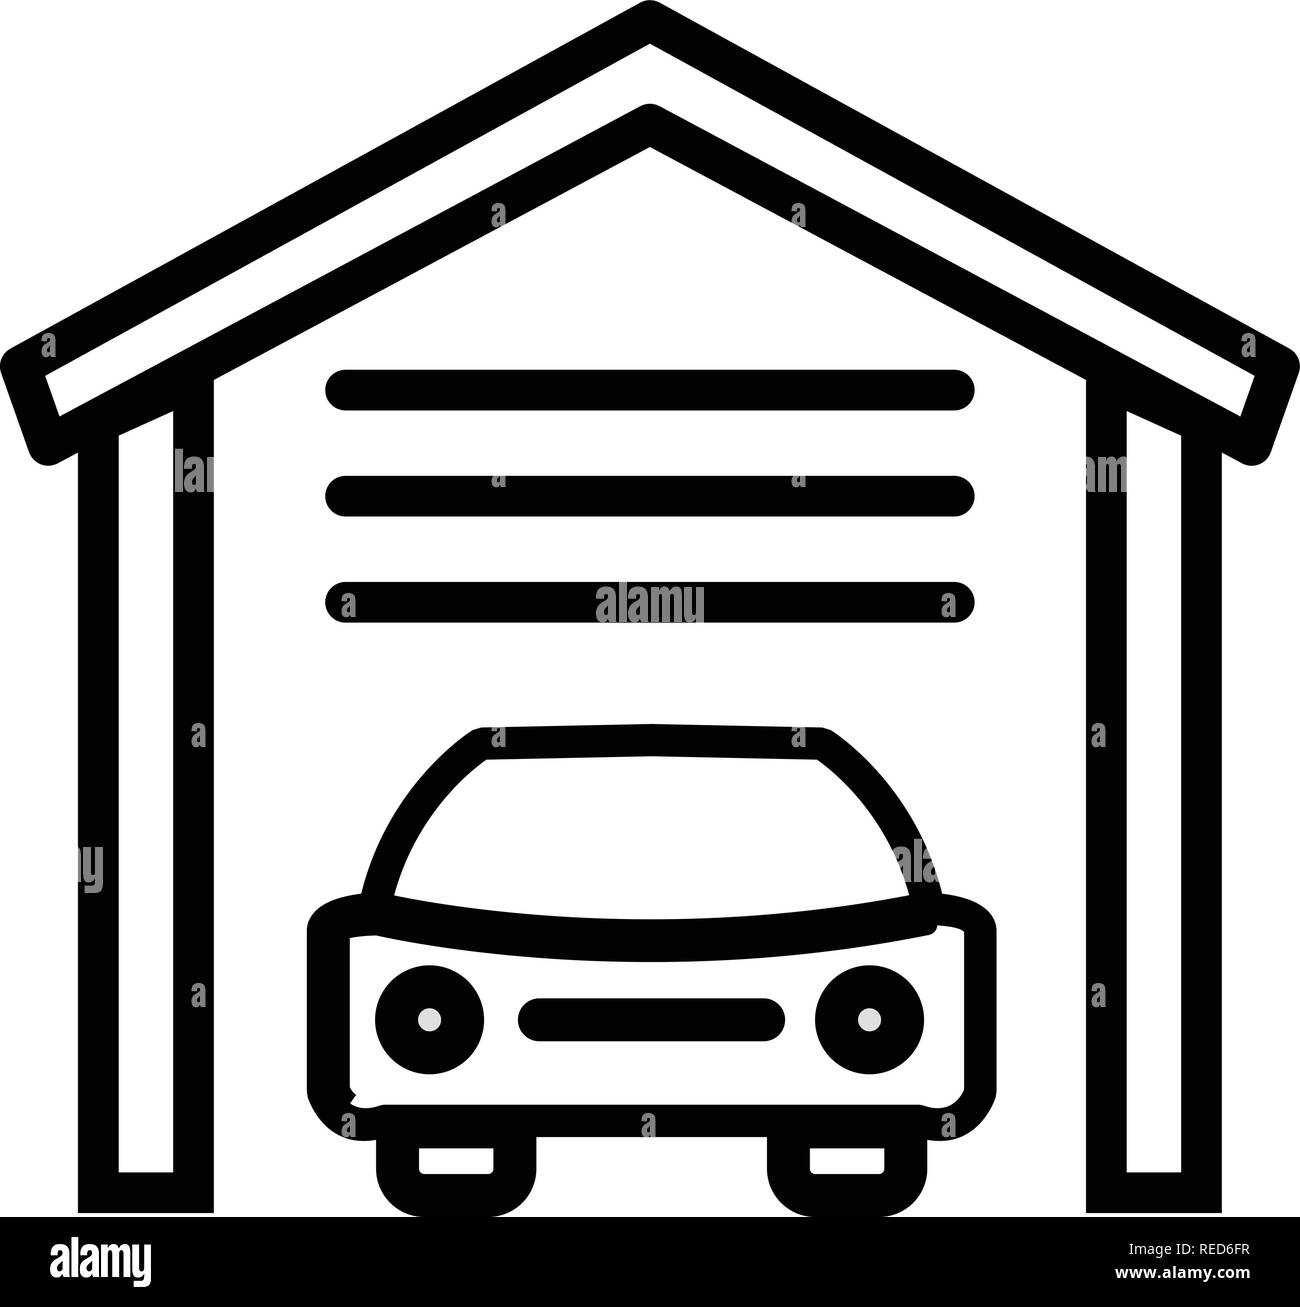 The Clean Garage Classic Logo Sticker | 3 Matte White and Black